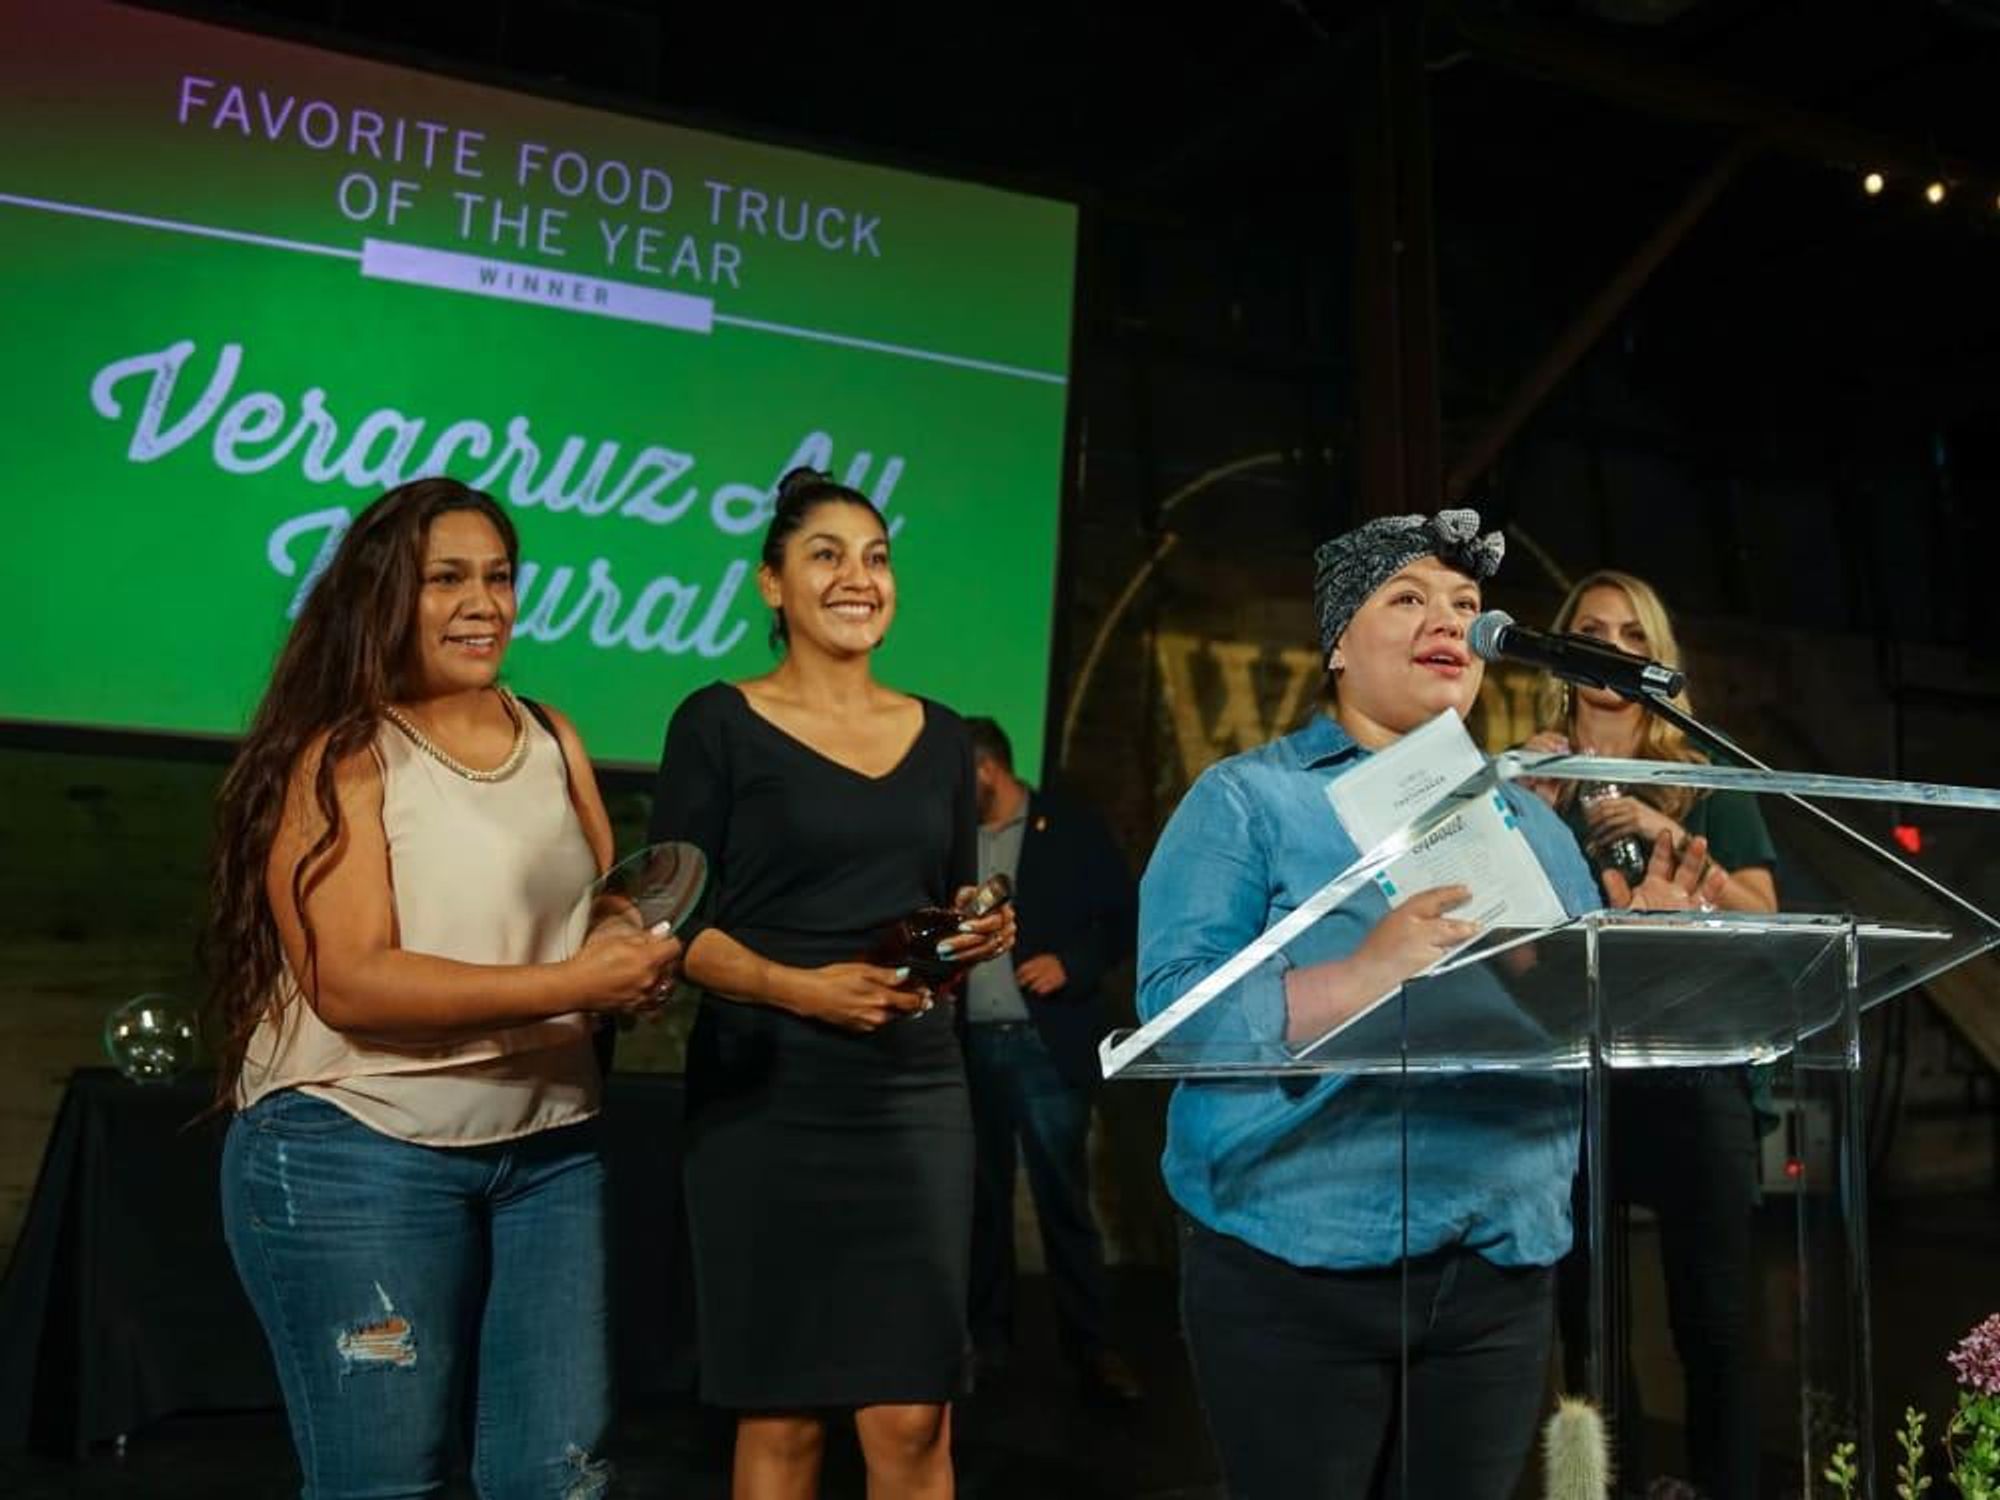 CultureMap Austin 2018 Tastemaker Awards at Fair Market Favorite Food Truck of the Year Veracruz All Natural